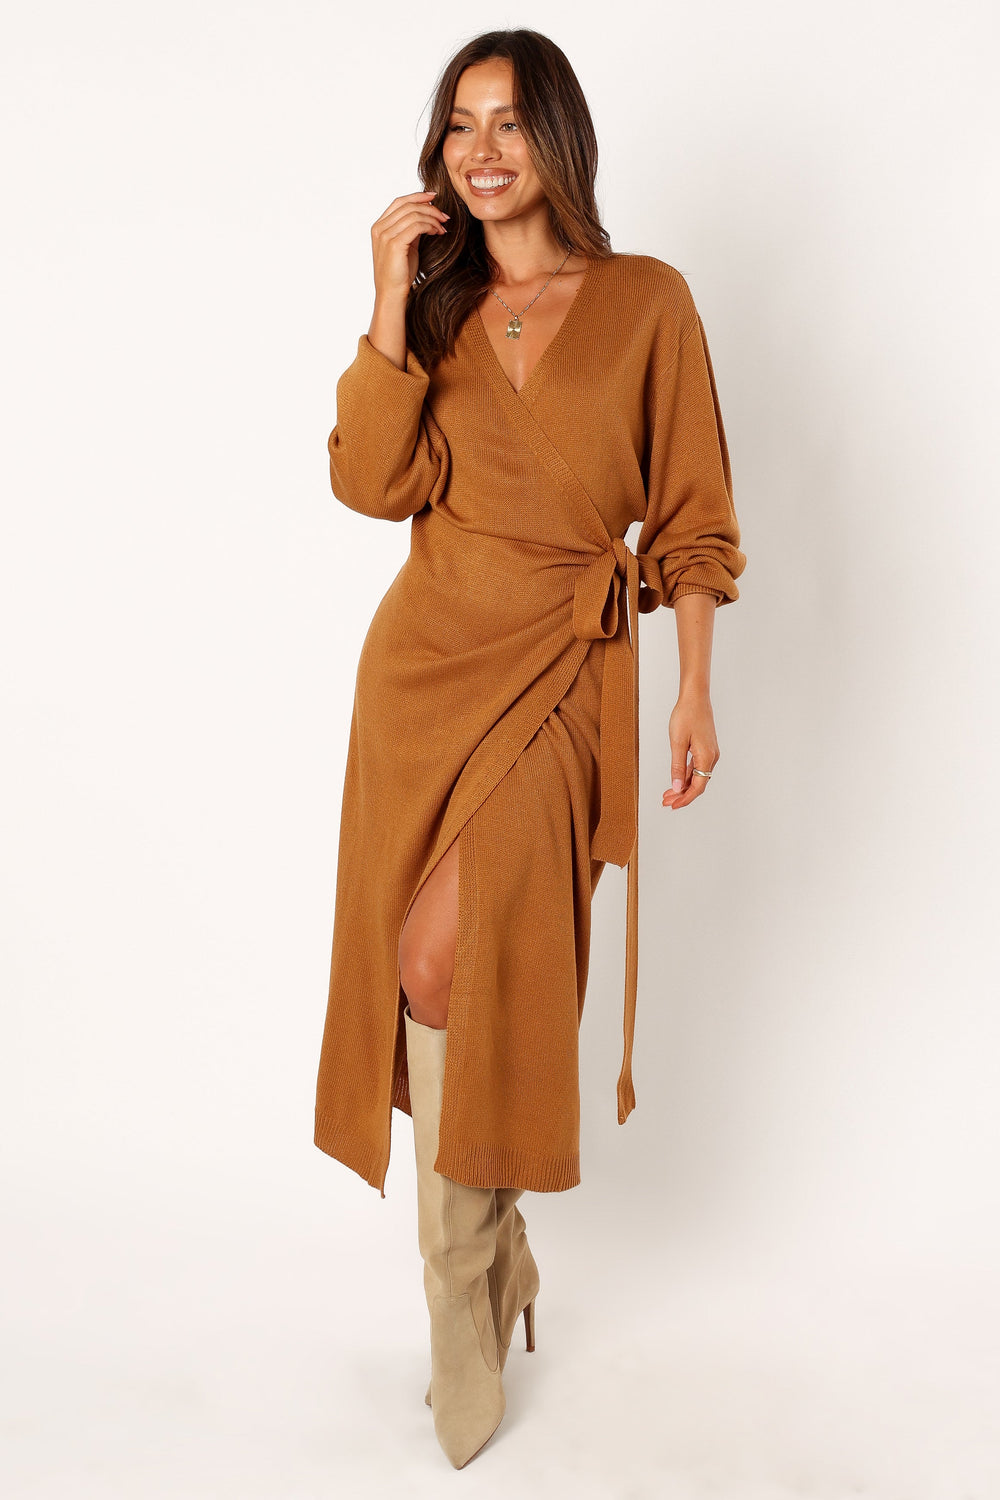 Petal and Pup USA DRESSES Nova Wrap Knit Midi Dress - Camel